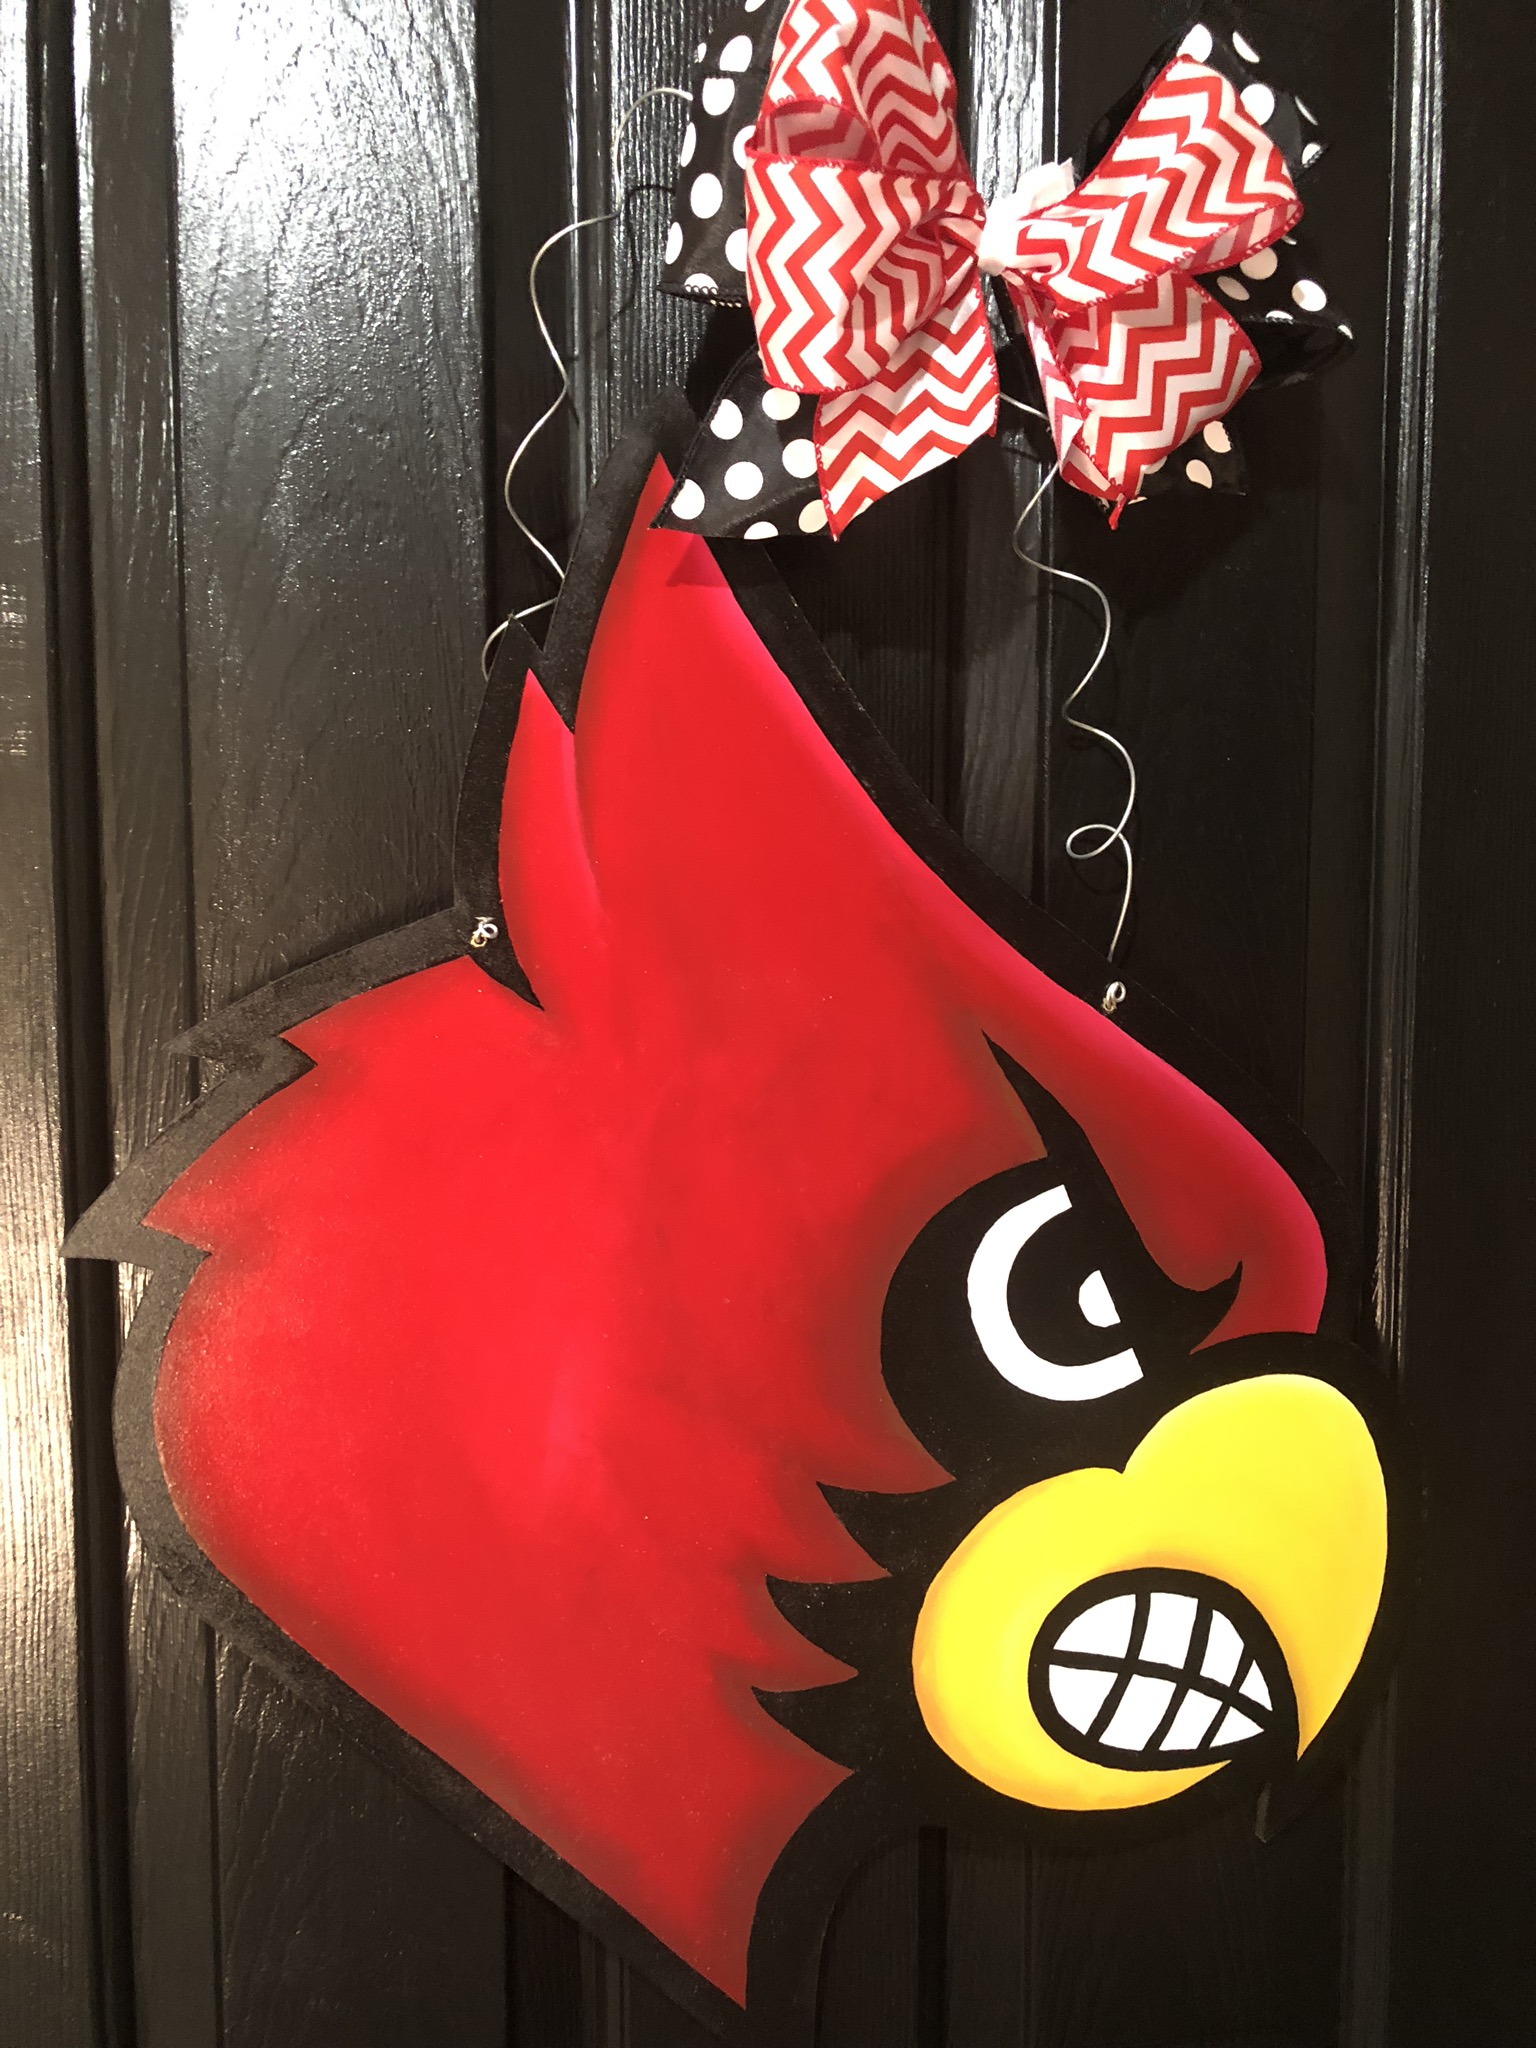 Louisville Cardinals Ribbon 